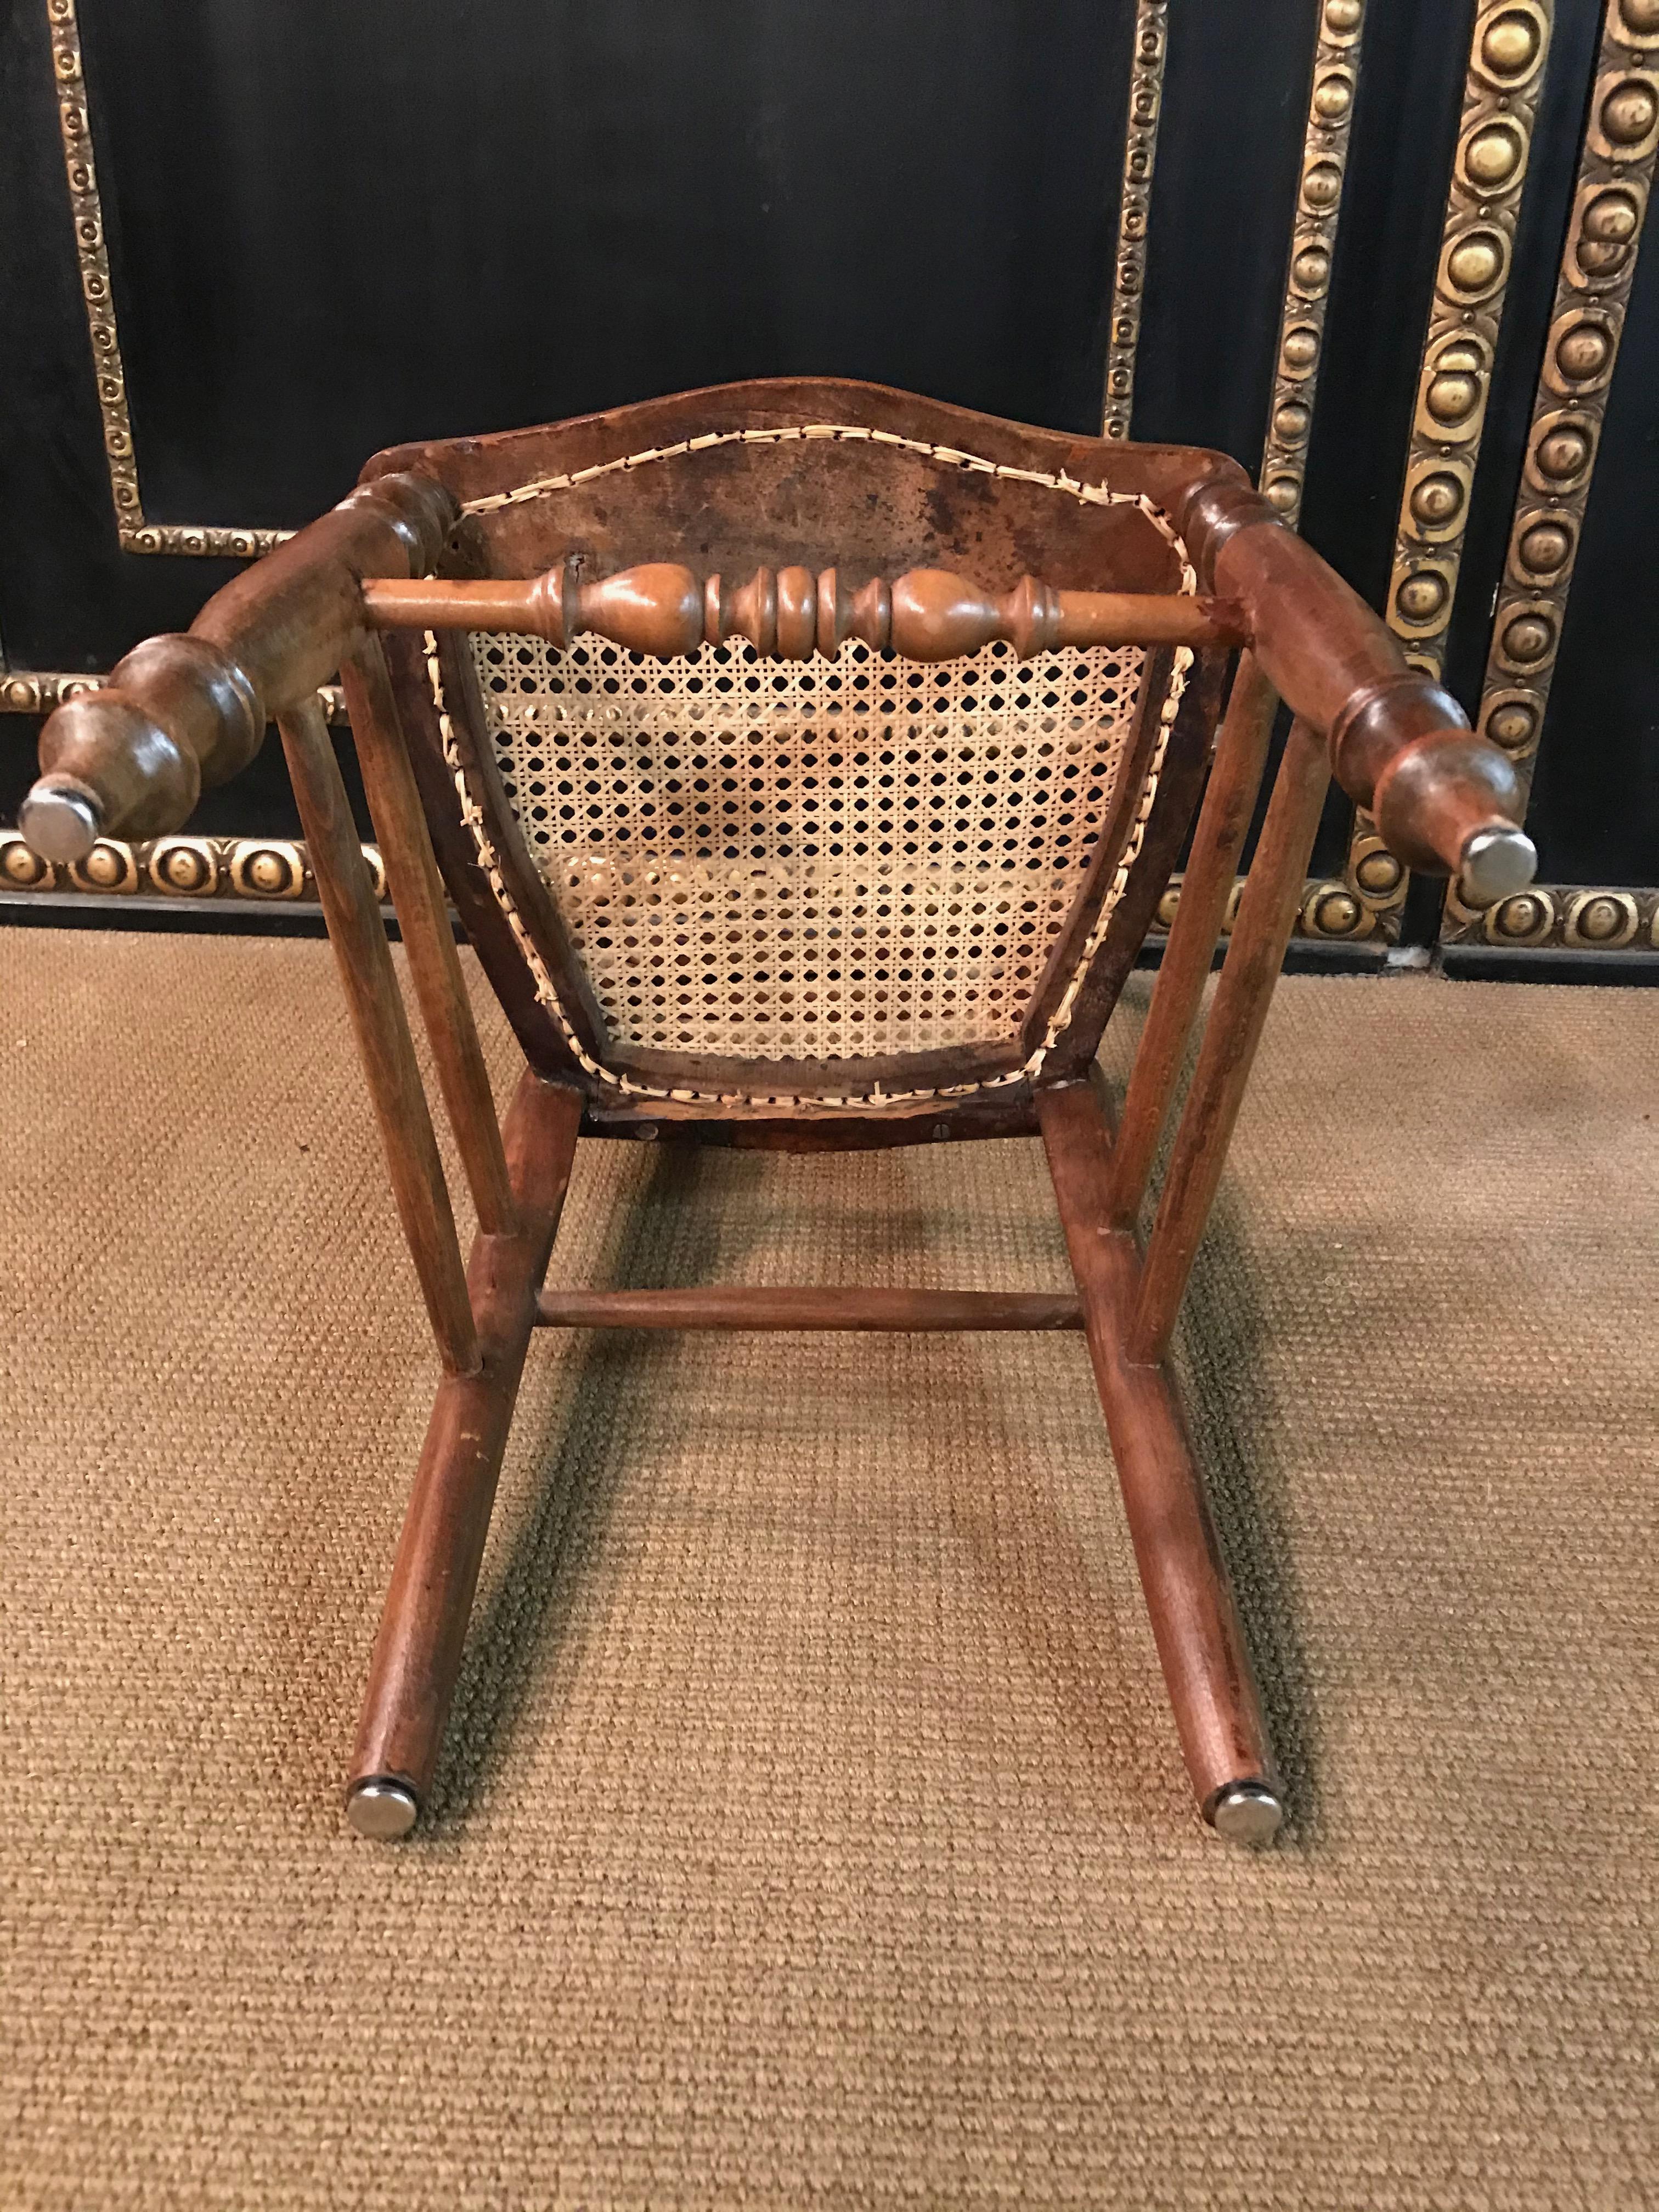 6 Original Biedermeier Chairs Caféhaus Seat Weave circa 1850-1860 Solid Mahogany For Sale 12